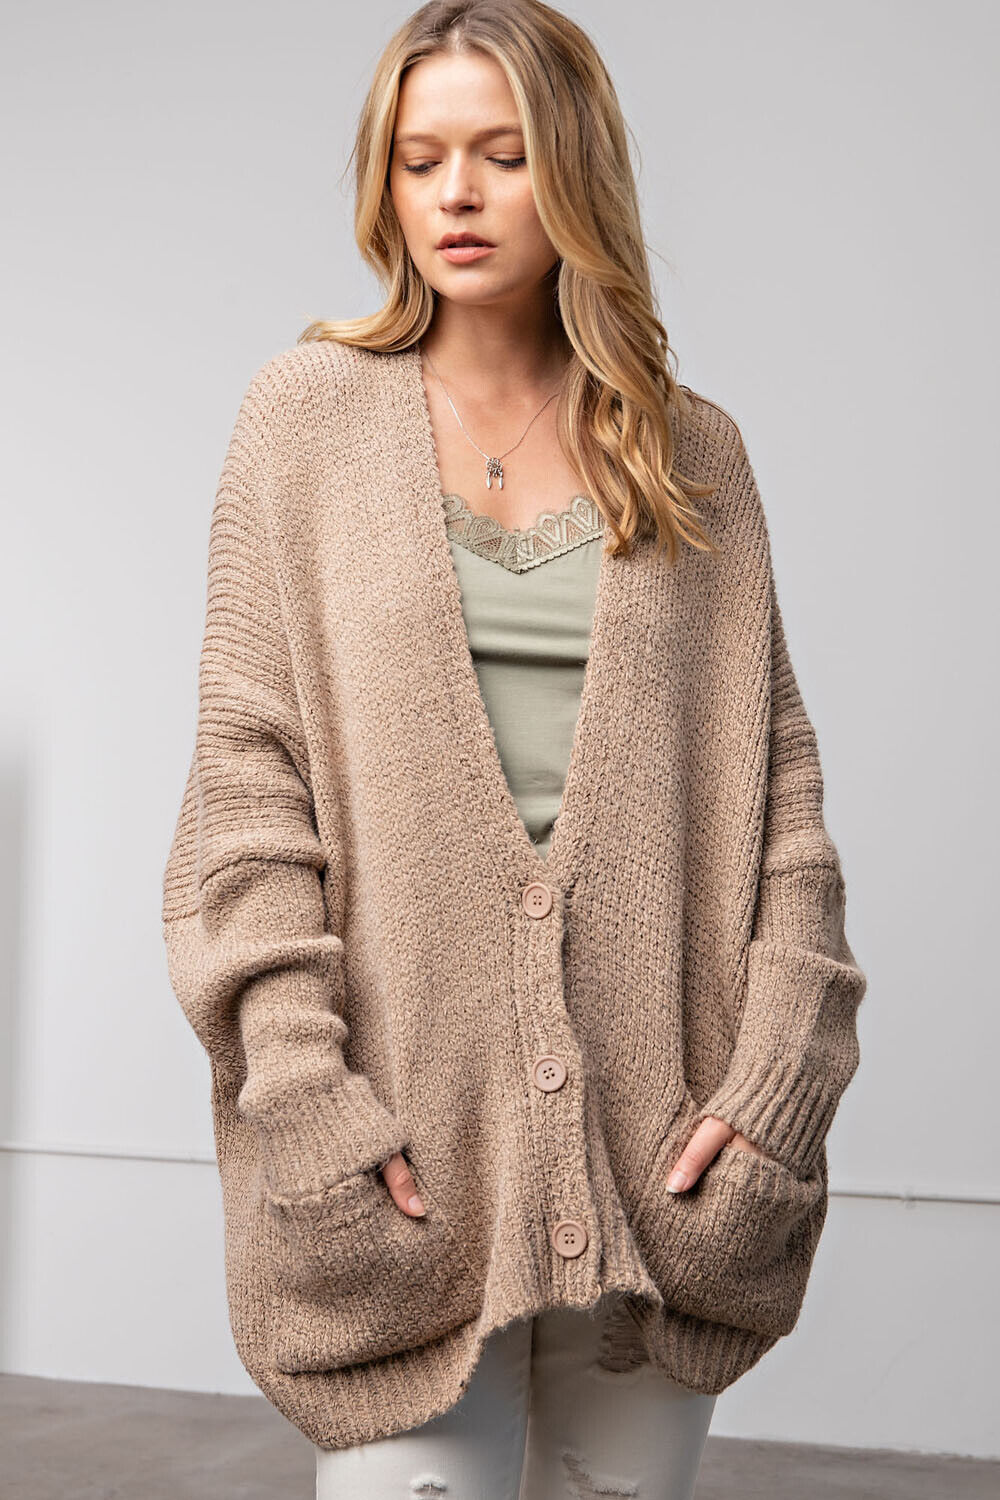 Cardigan Knit Tan Easel ET21418 Khaki | New Soft Sweater Oversized Slouchy eBay S-L